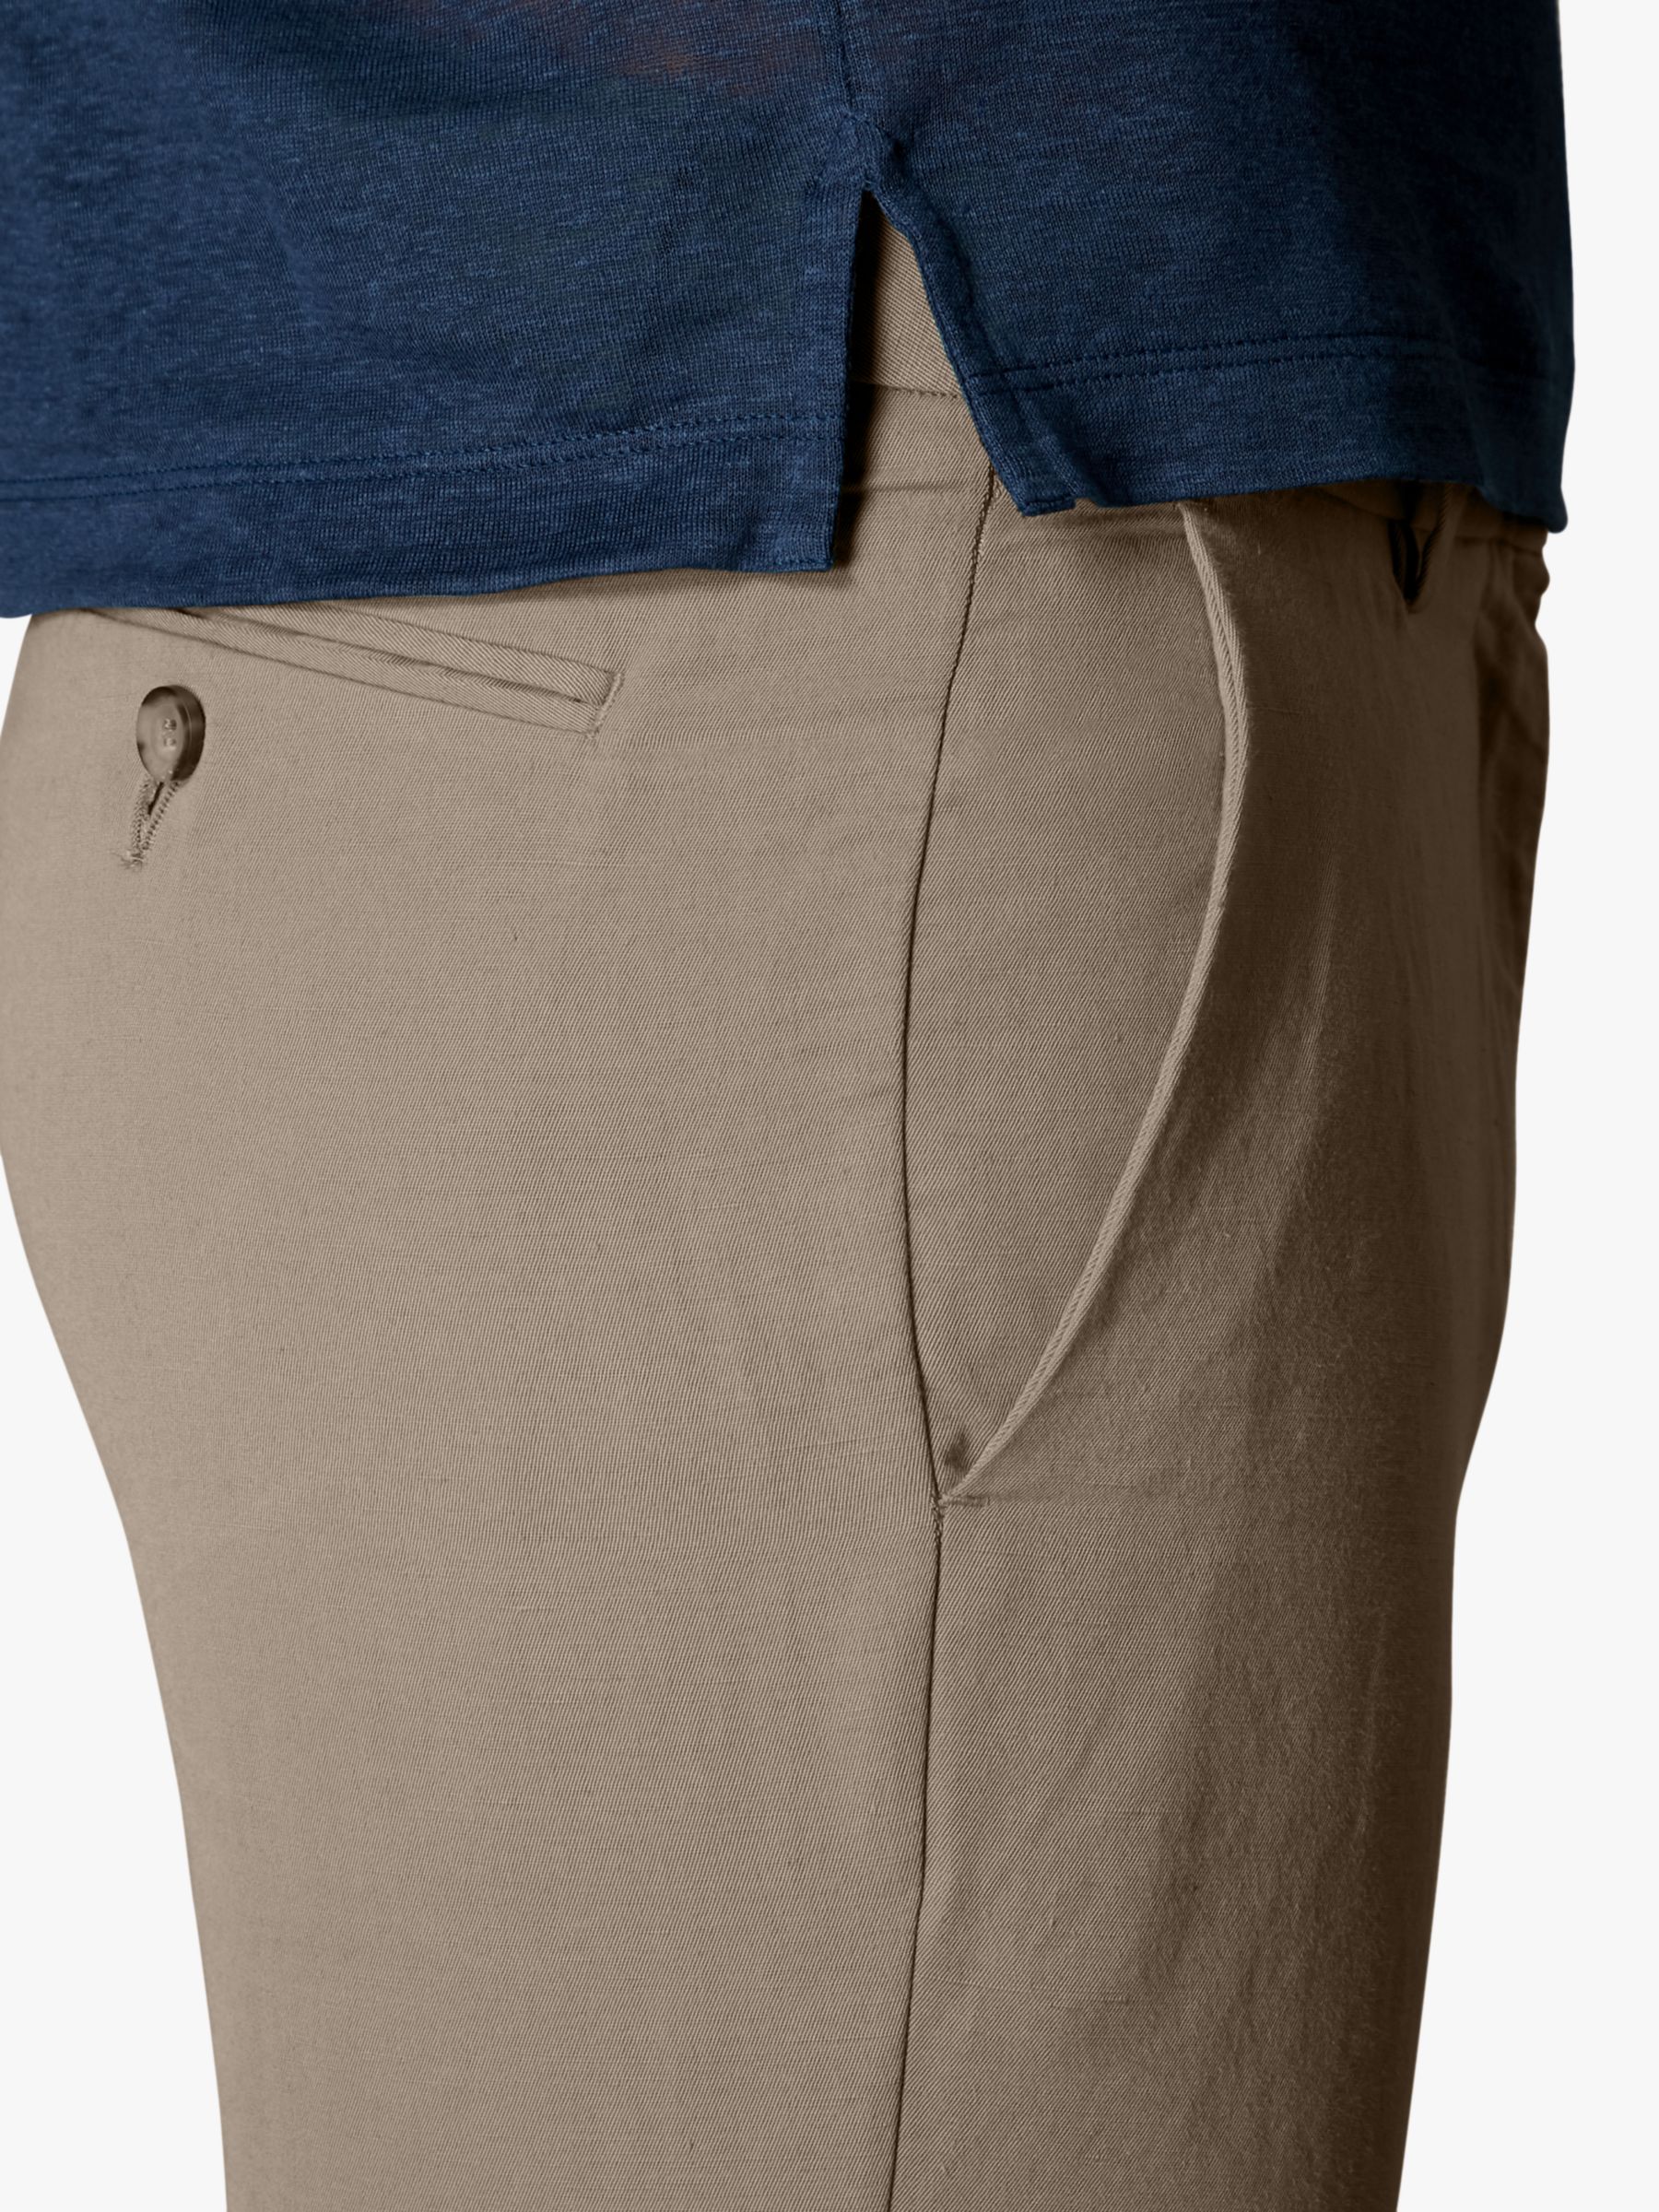 SPOKE Linen Sharps Slim Thigh Trousers, Hopsack, W30/L28